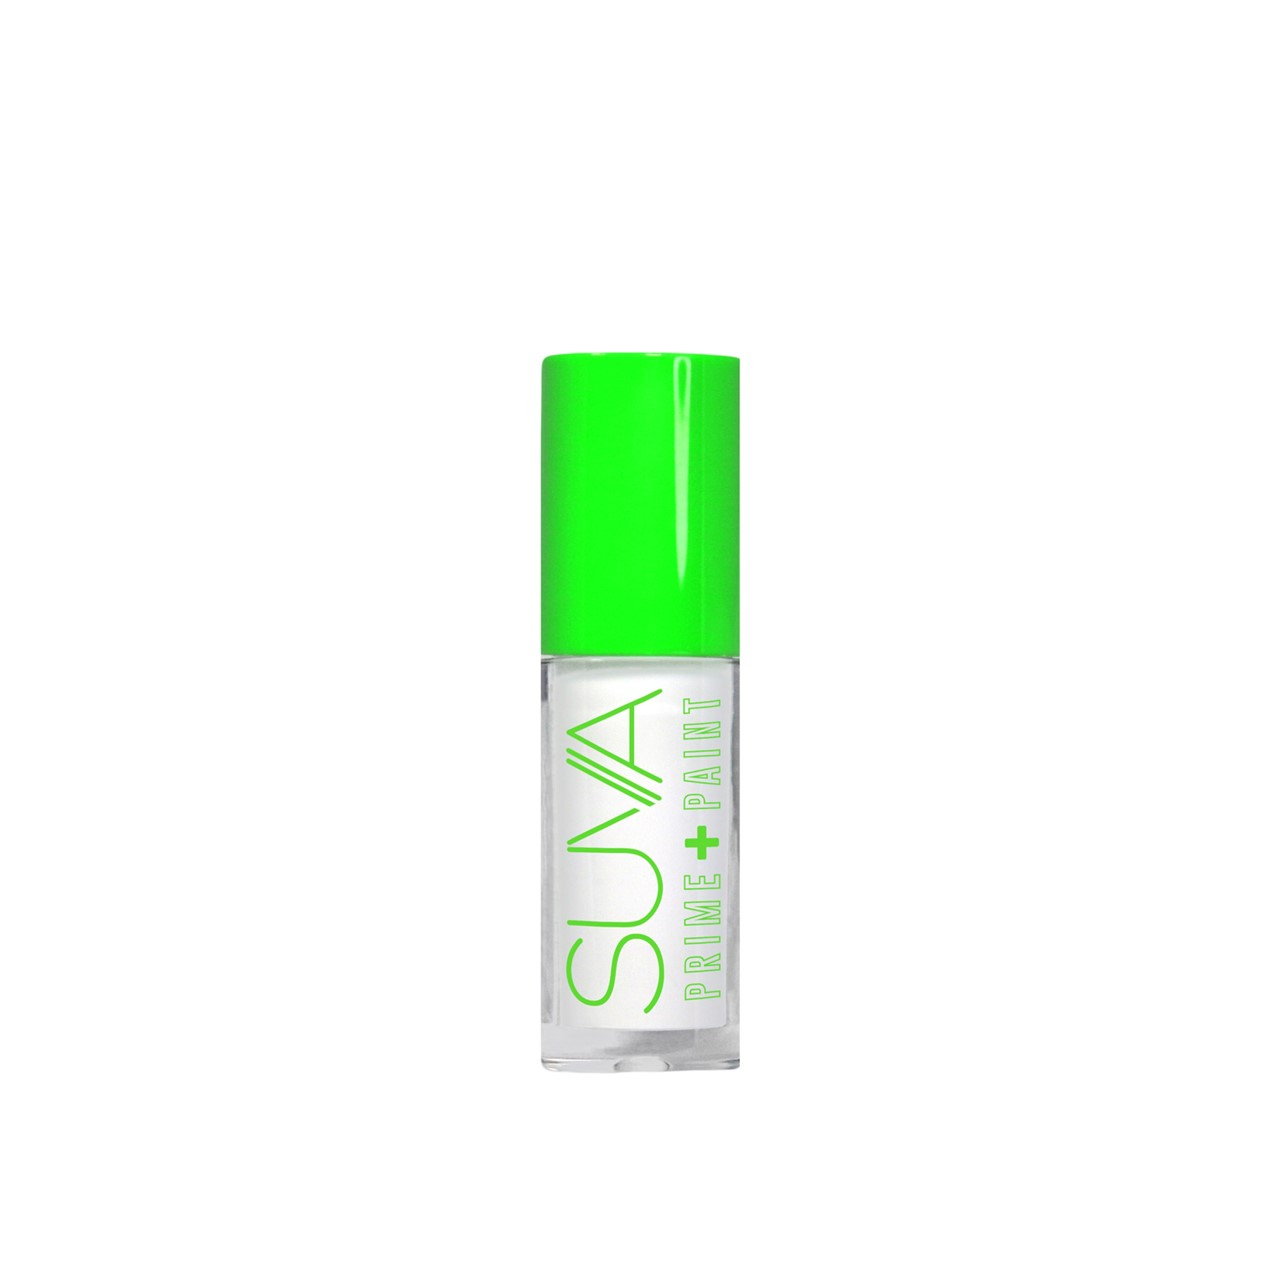 SUVA Beauty Prime + Paint White 5ml